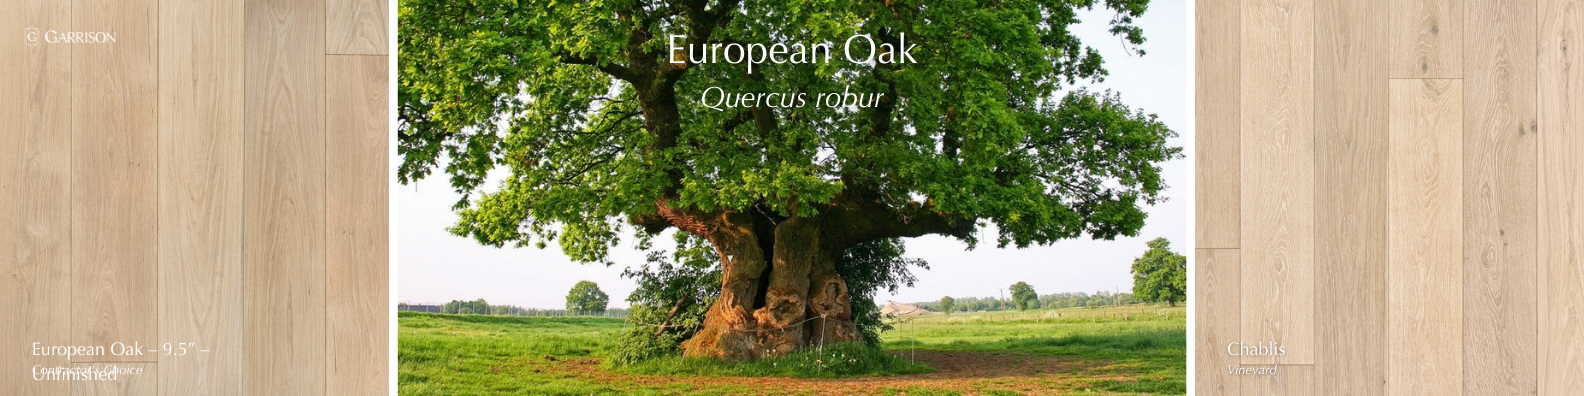 European Oak - 7 Most Popular Hardwood Species - Garrison Collection